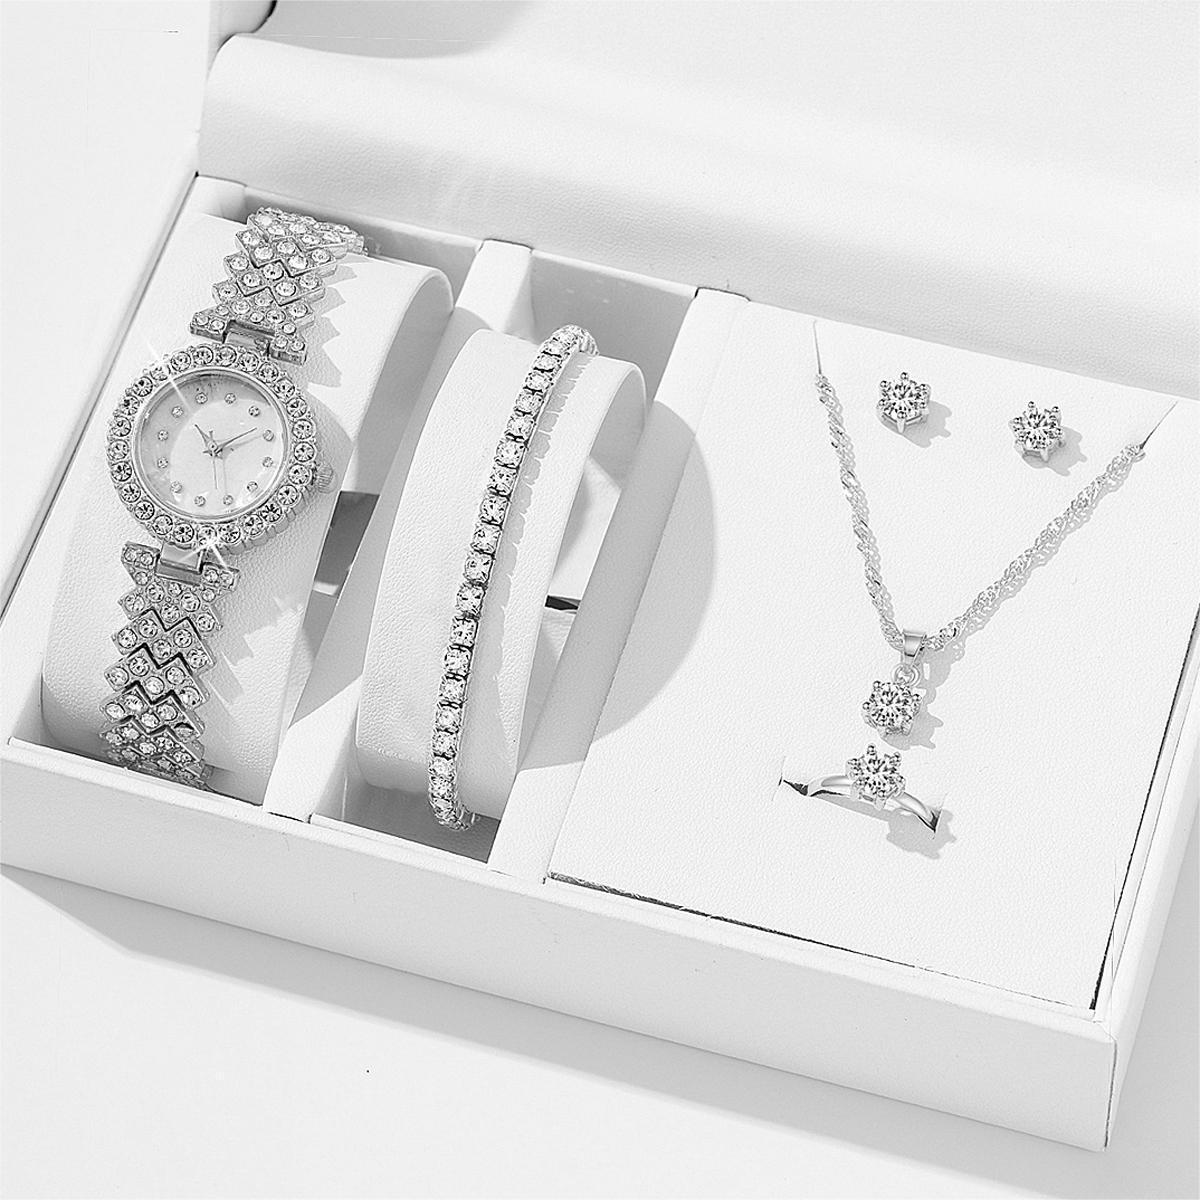 Women's Gift Set With Rhinestone Watch